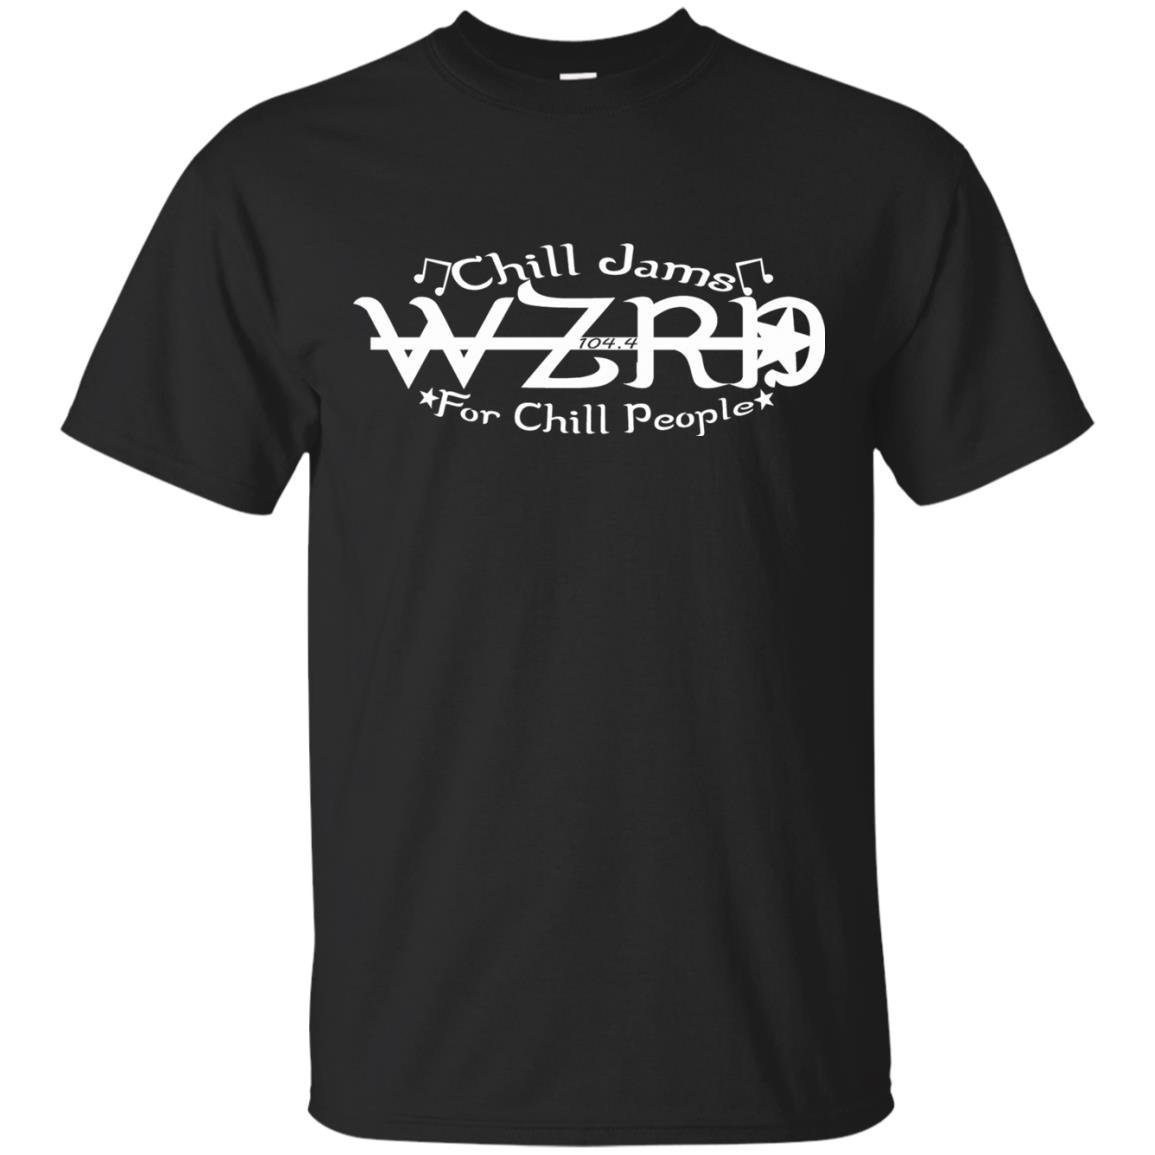 wzrd shirt - black